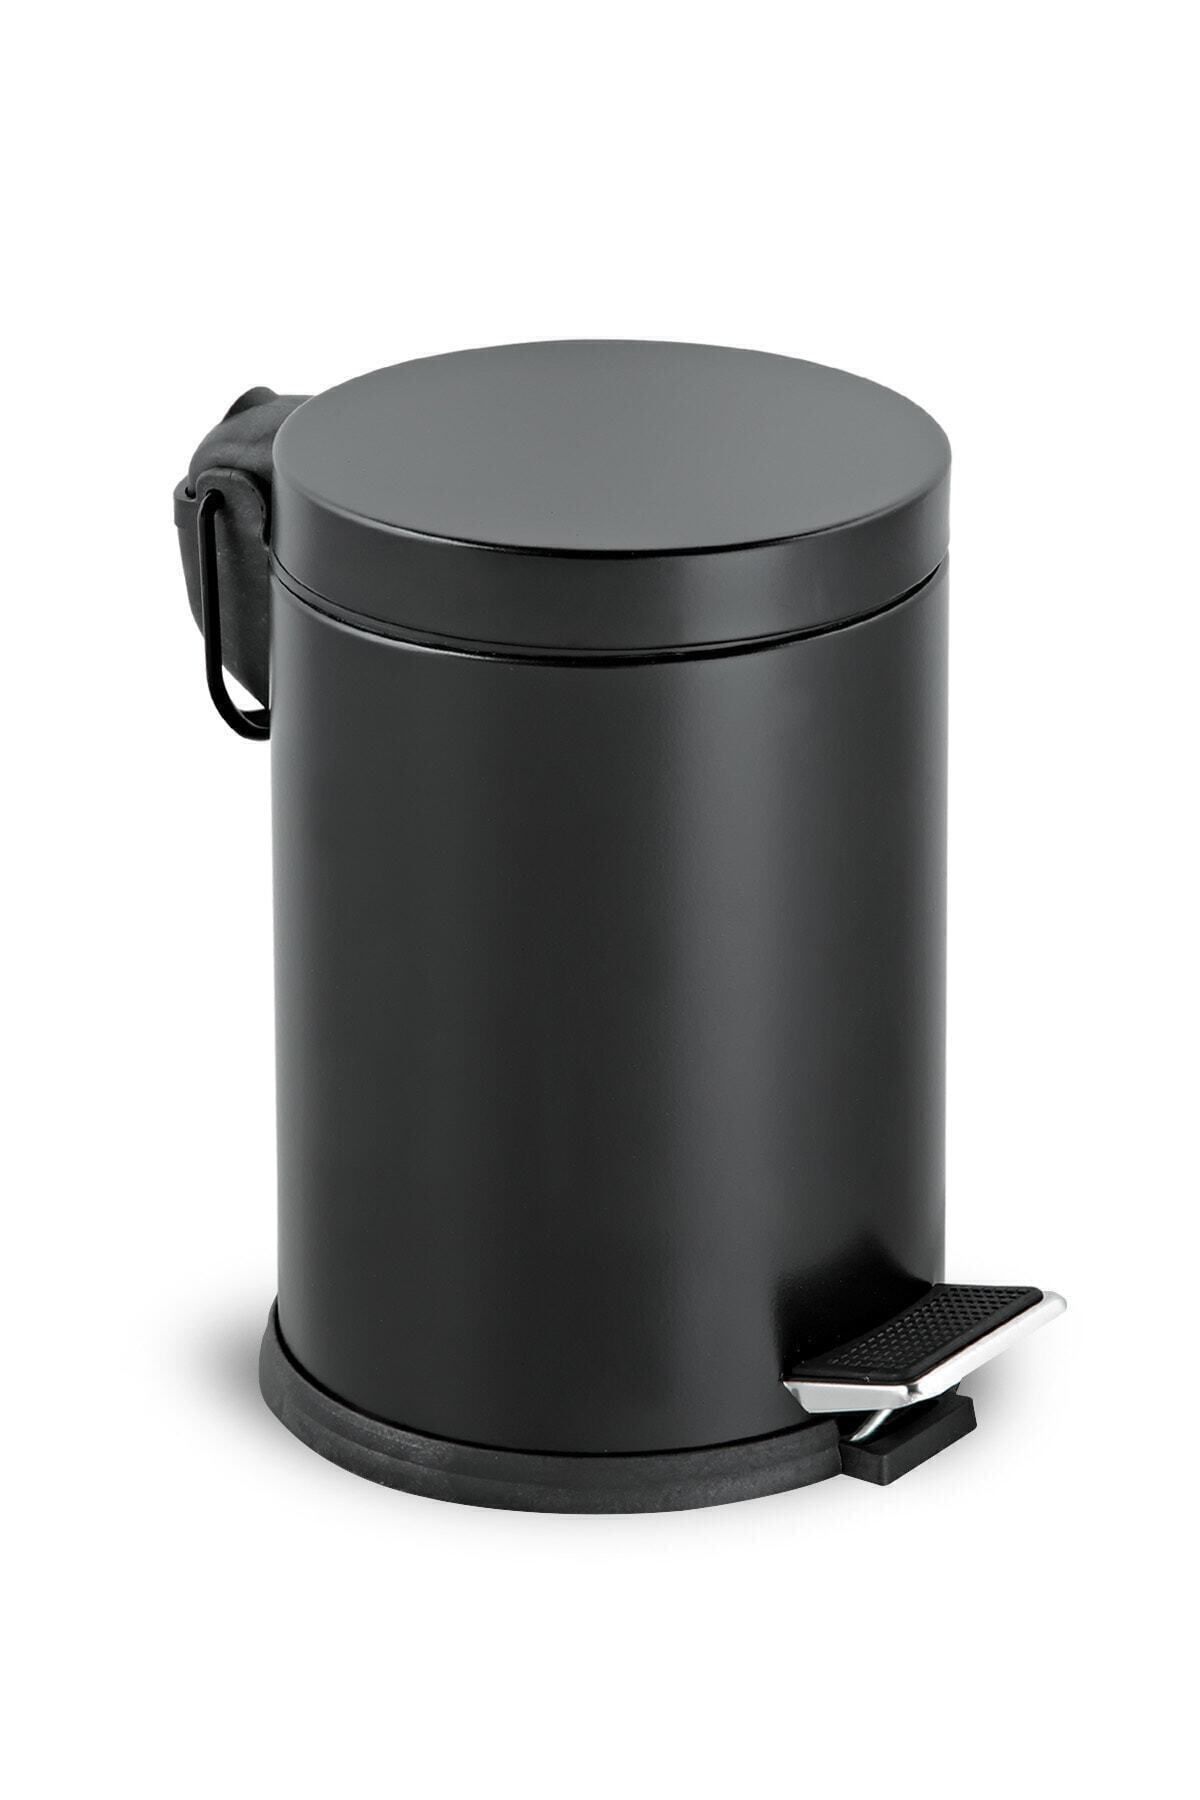 GörSeç Siyah Renkli Pedallı Metal 3 Litre Siyah Çöp Kovası Banyo Tuvalet Balkon Mutfak